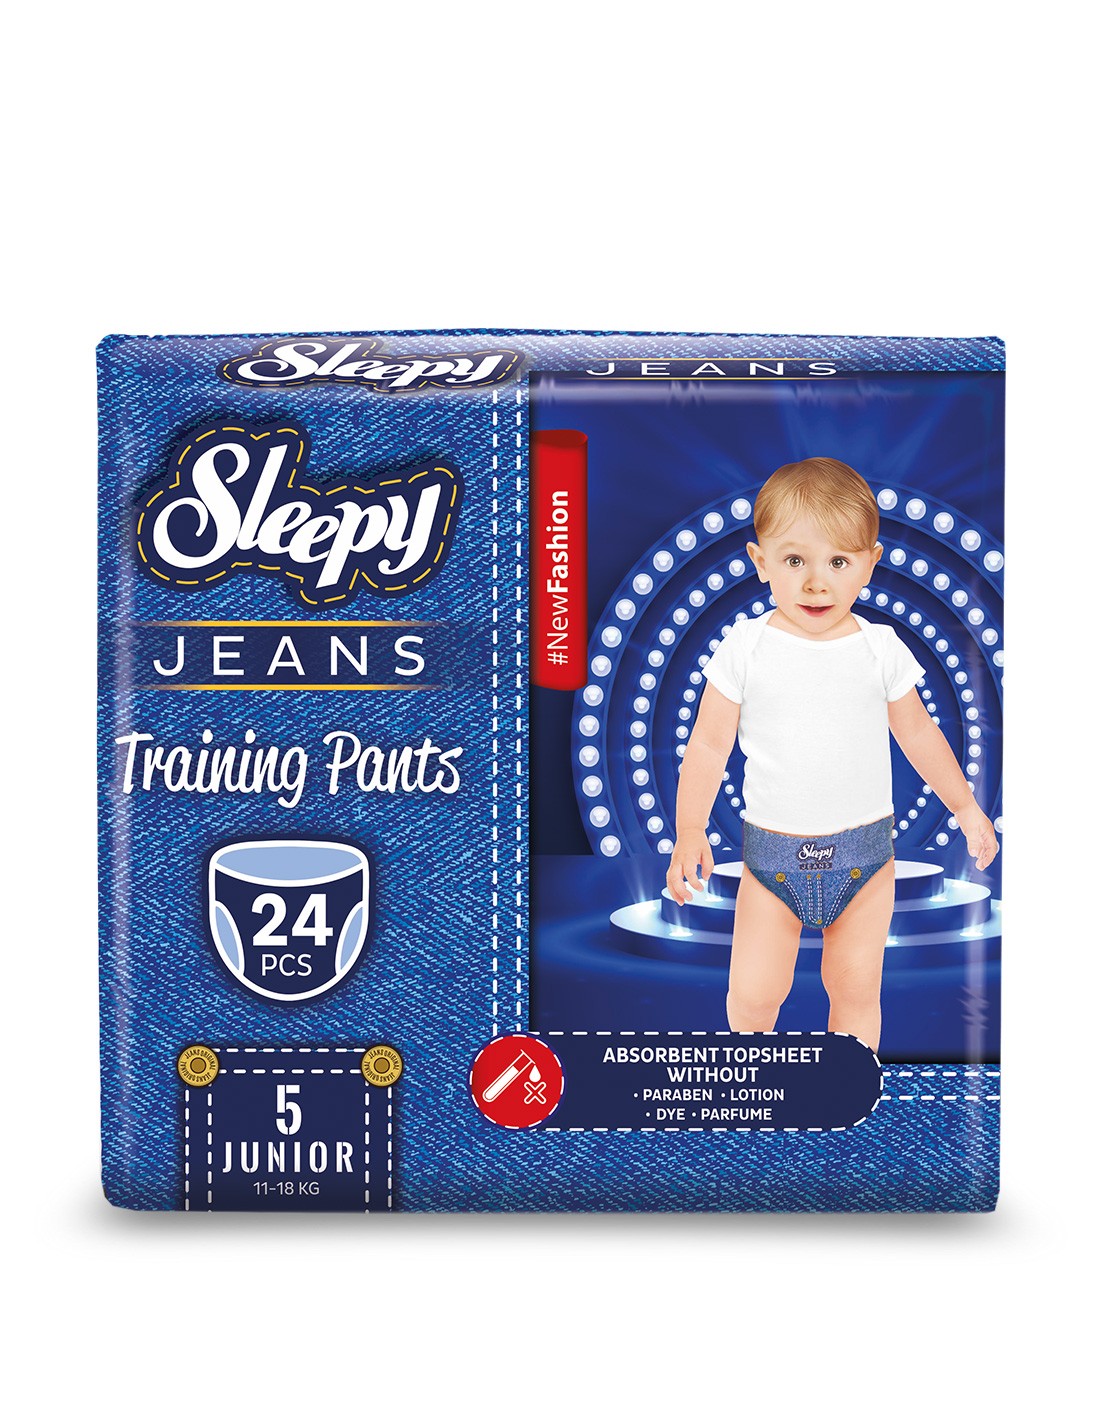 Diapers Sleepy Jeans PANTS Junior. Size 5, 11-18kg. In the package